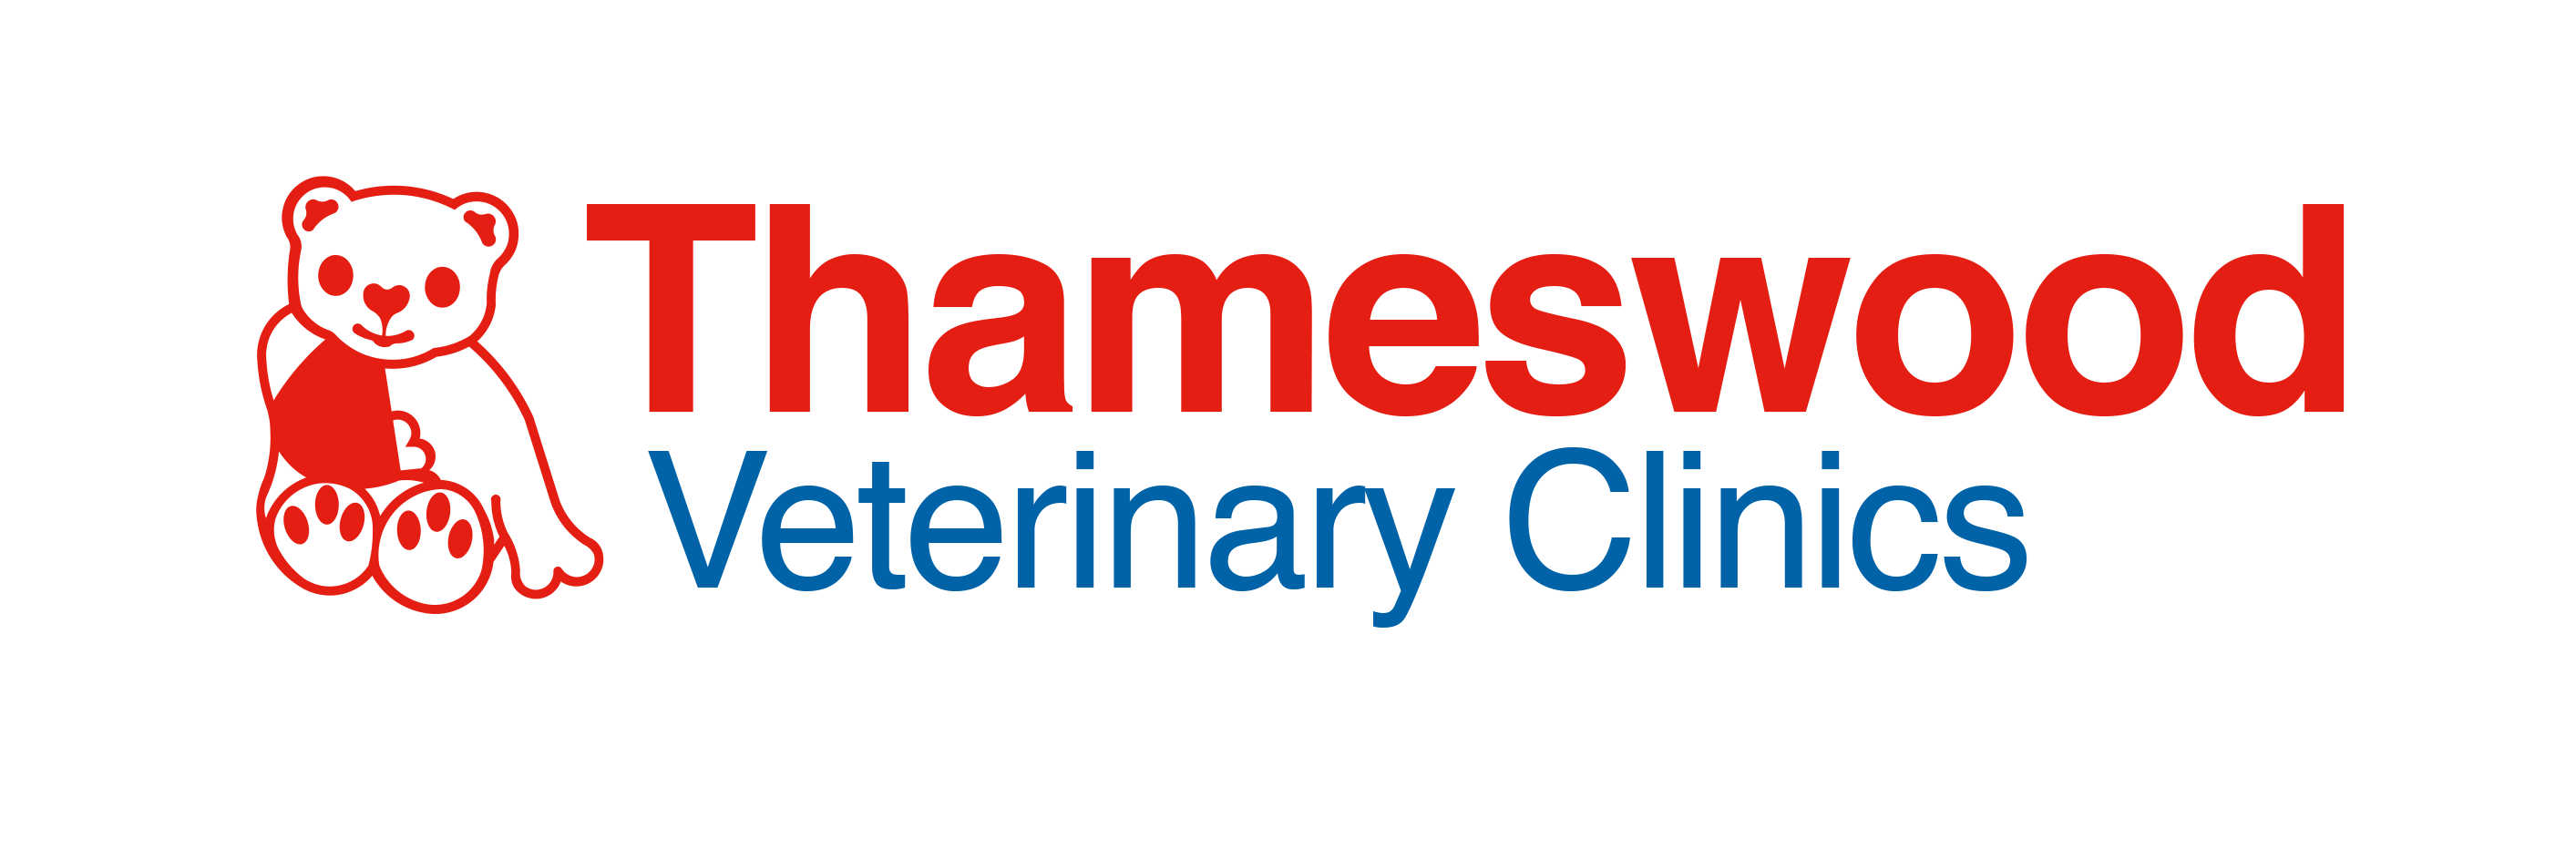 Thameswood Veterinary Clinic - Greenbridge Road